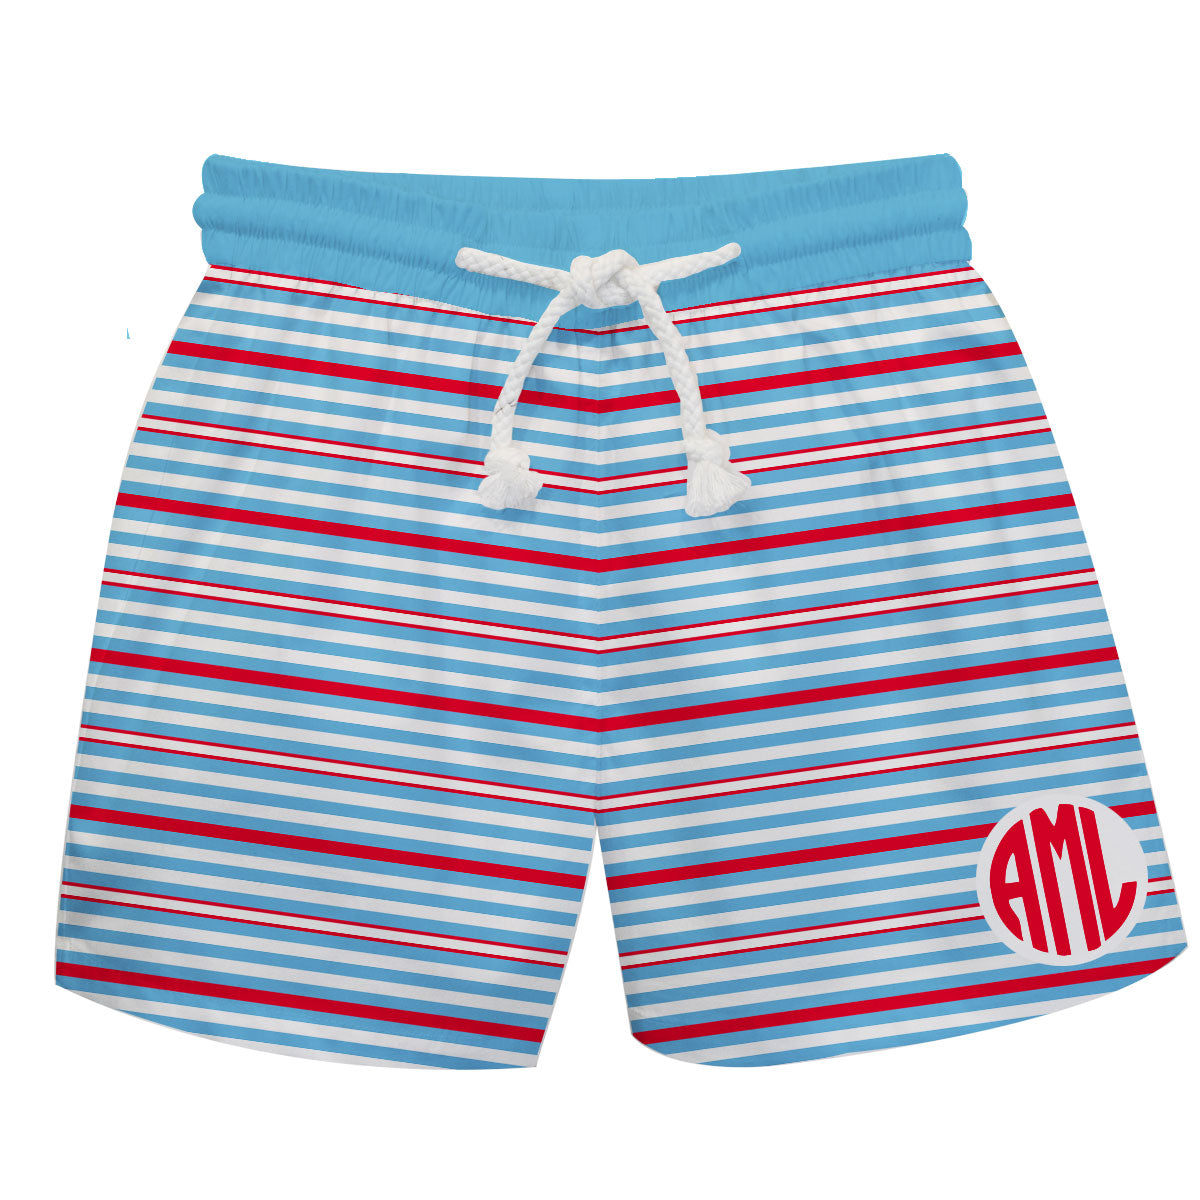 Stripes Light Blue and Red Swimtrunk